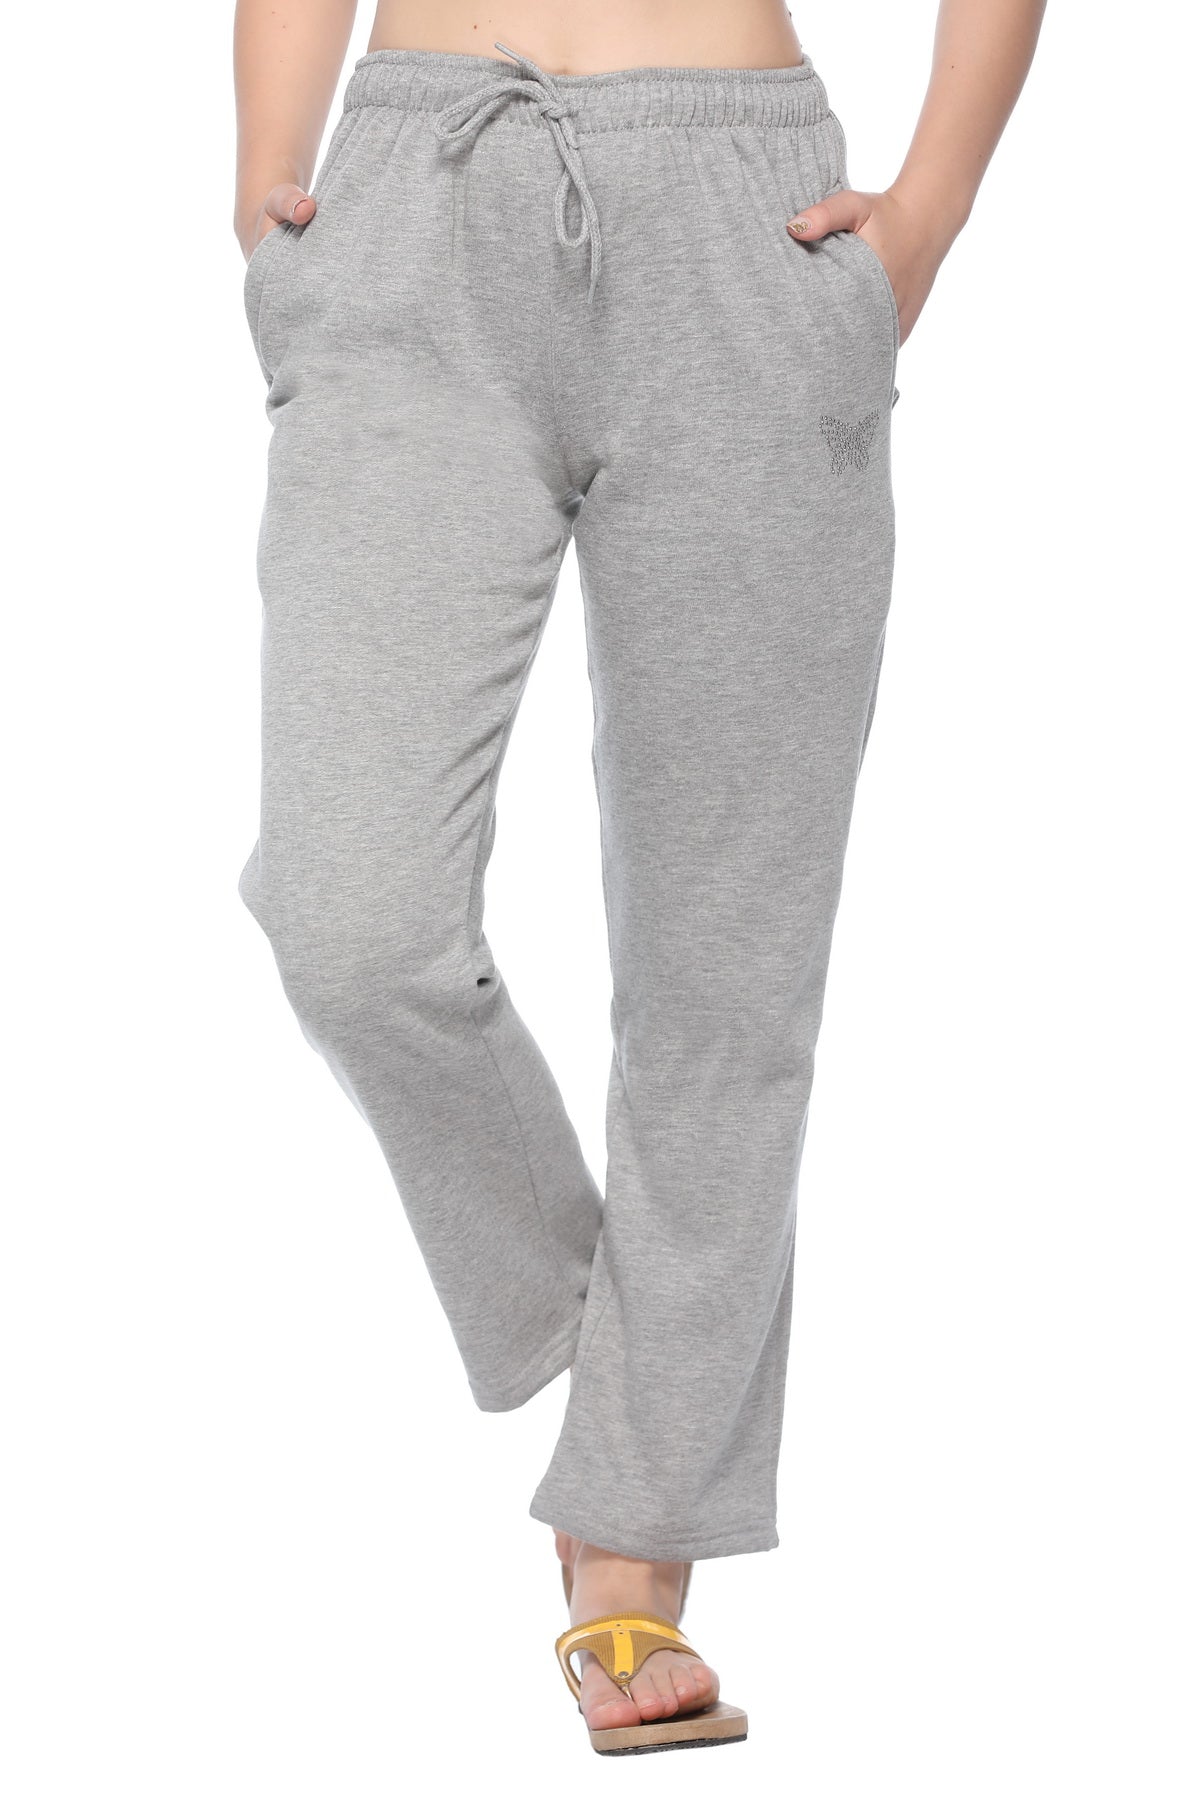 Buy tbase mens Pewter Grey Cotton Elastane Chino Pant for Men online India